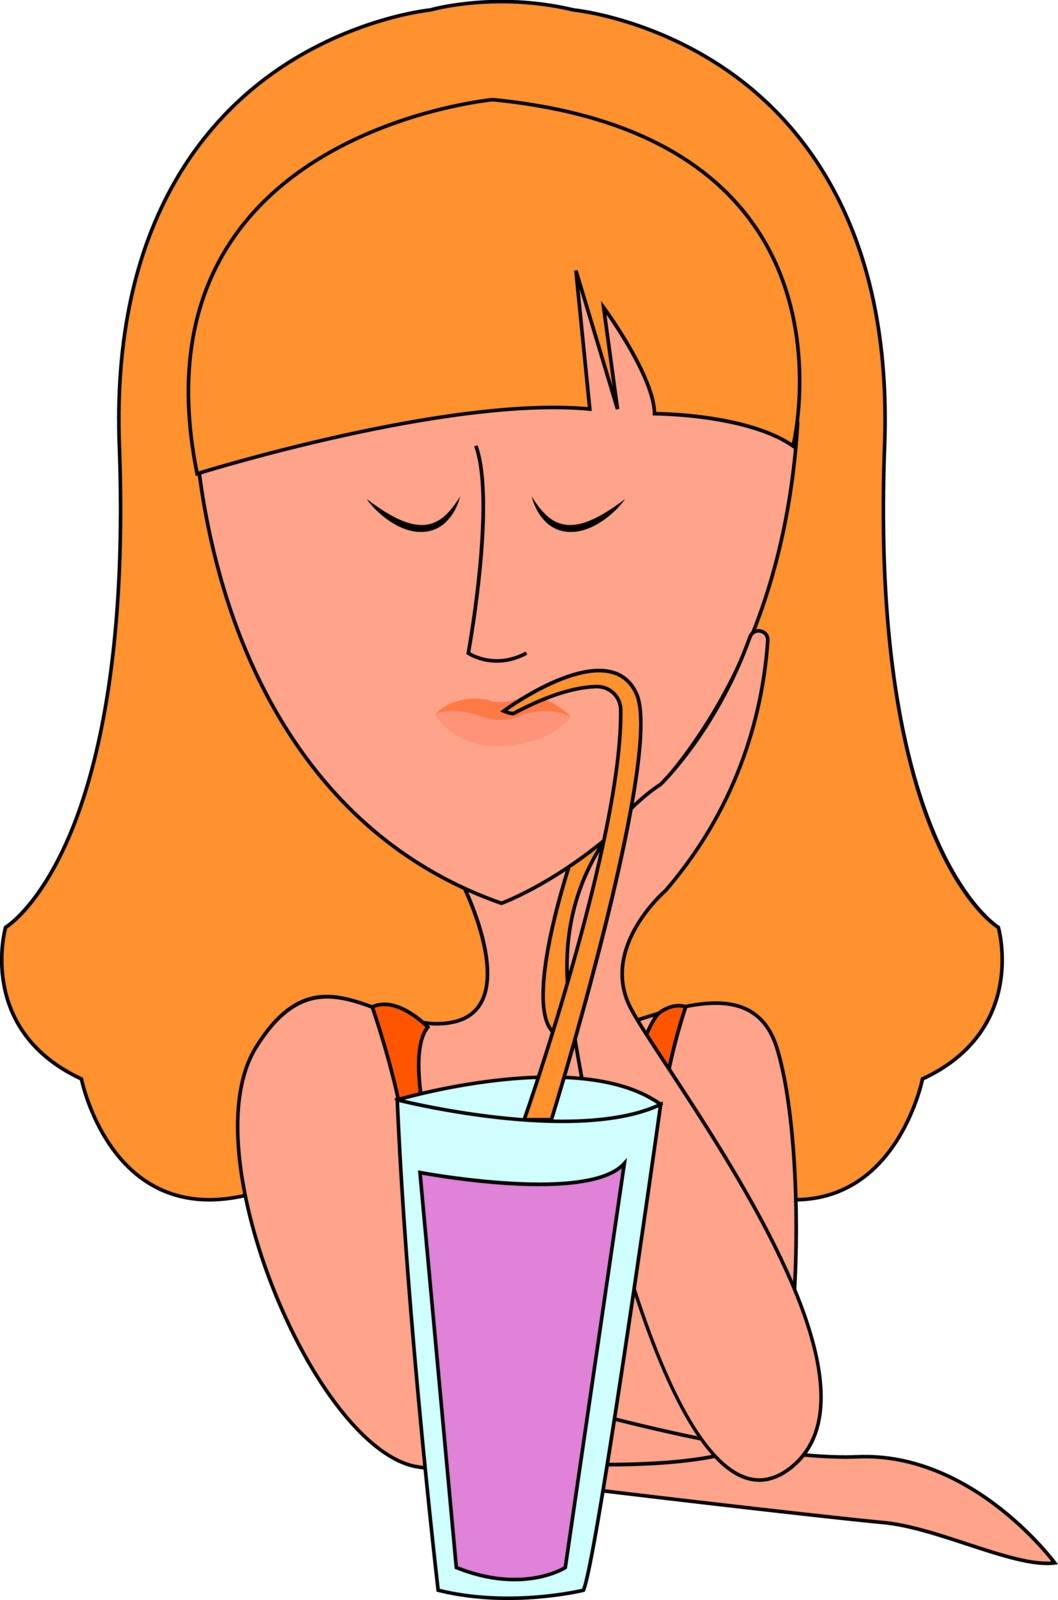 Girl drinking juice, illustration, vector on white background. by Morphart